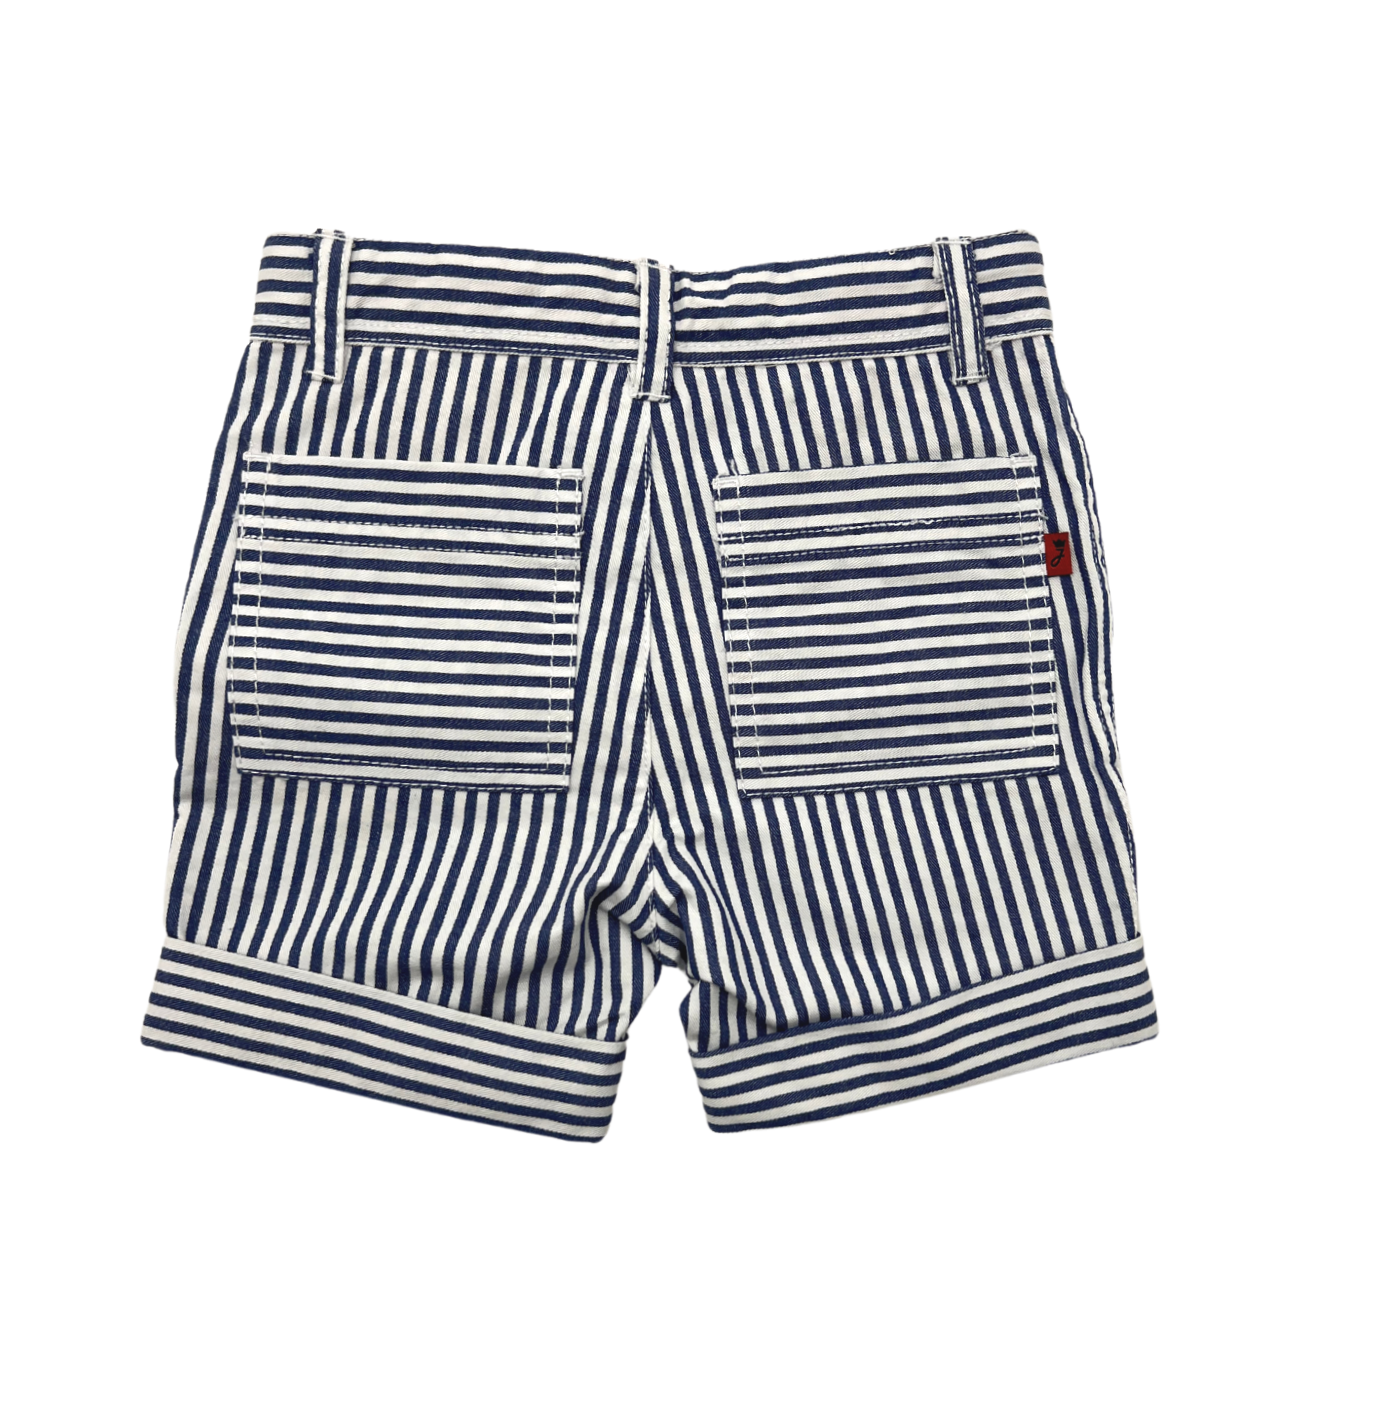 Jacadi - Striped shorts - 1 year old